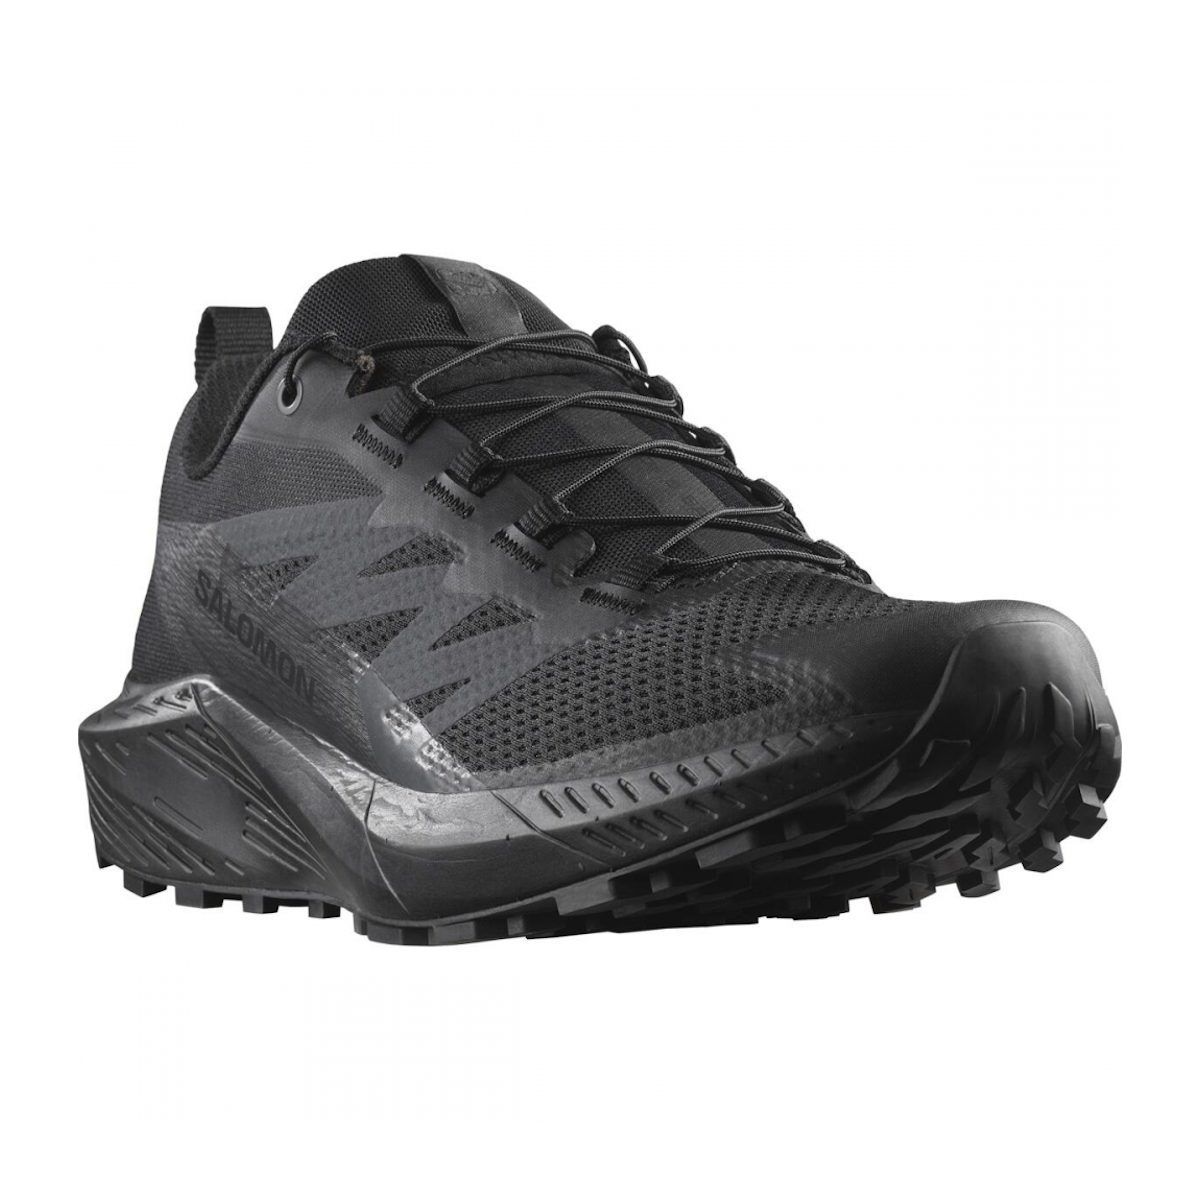 SALOMON SENSE RIDE 5 SR FORCES trail running shoes - black